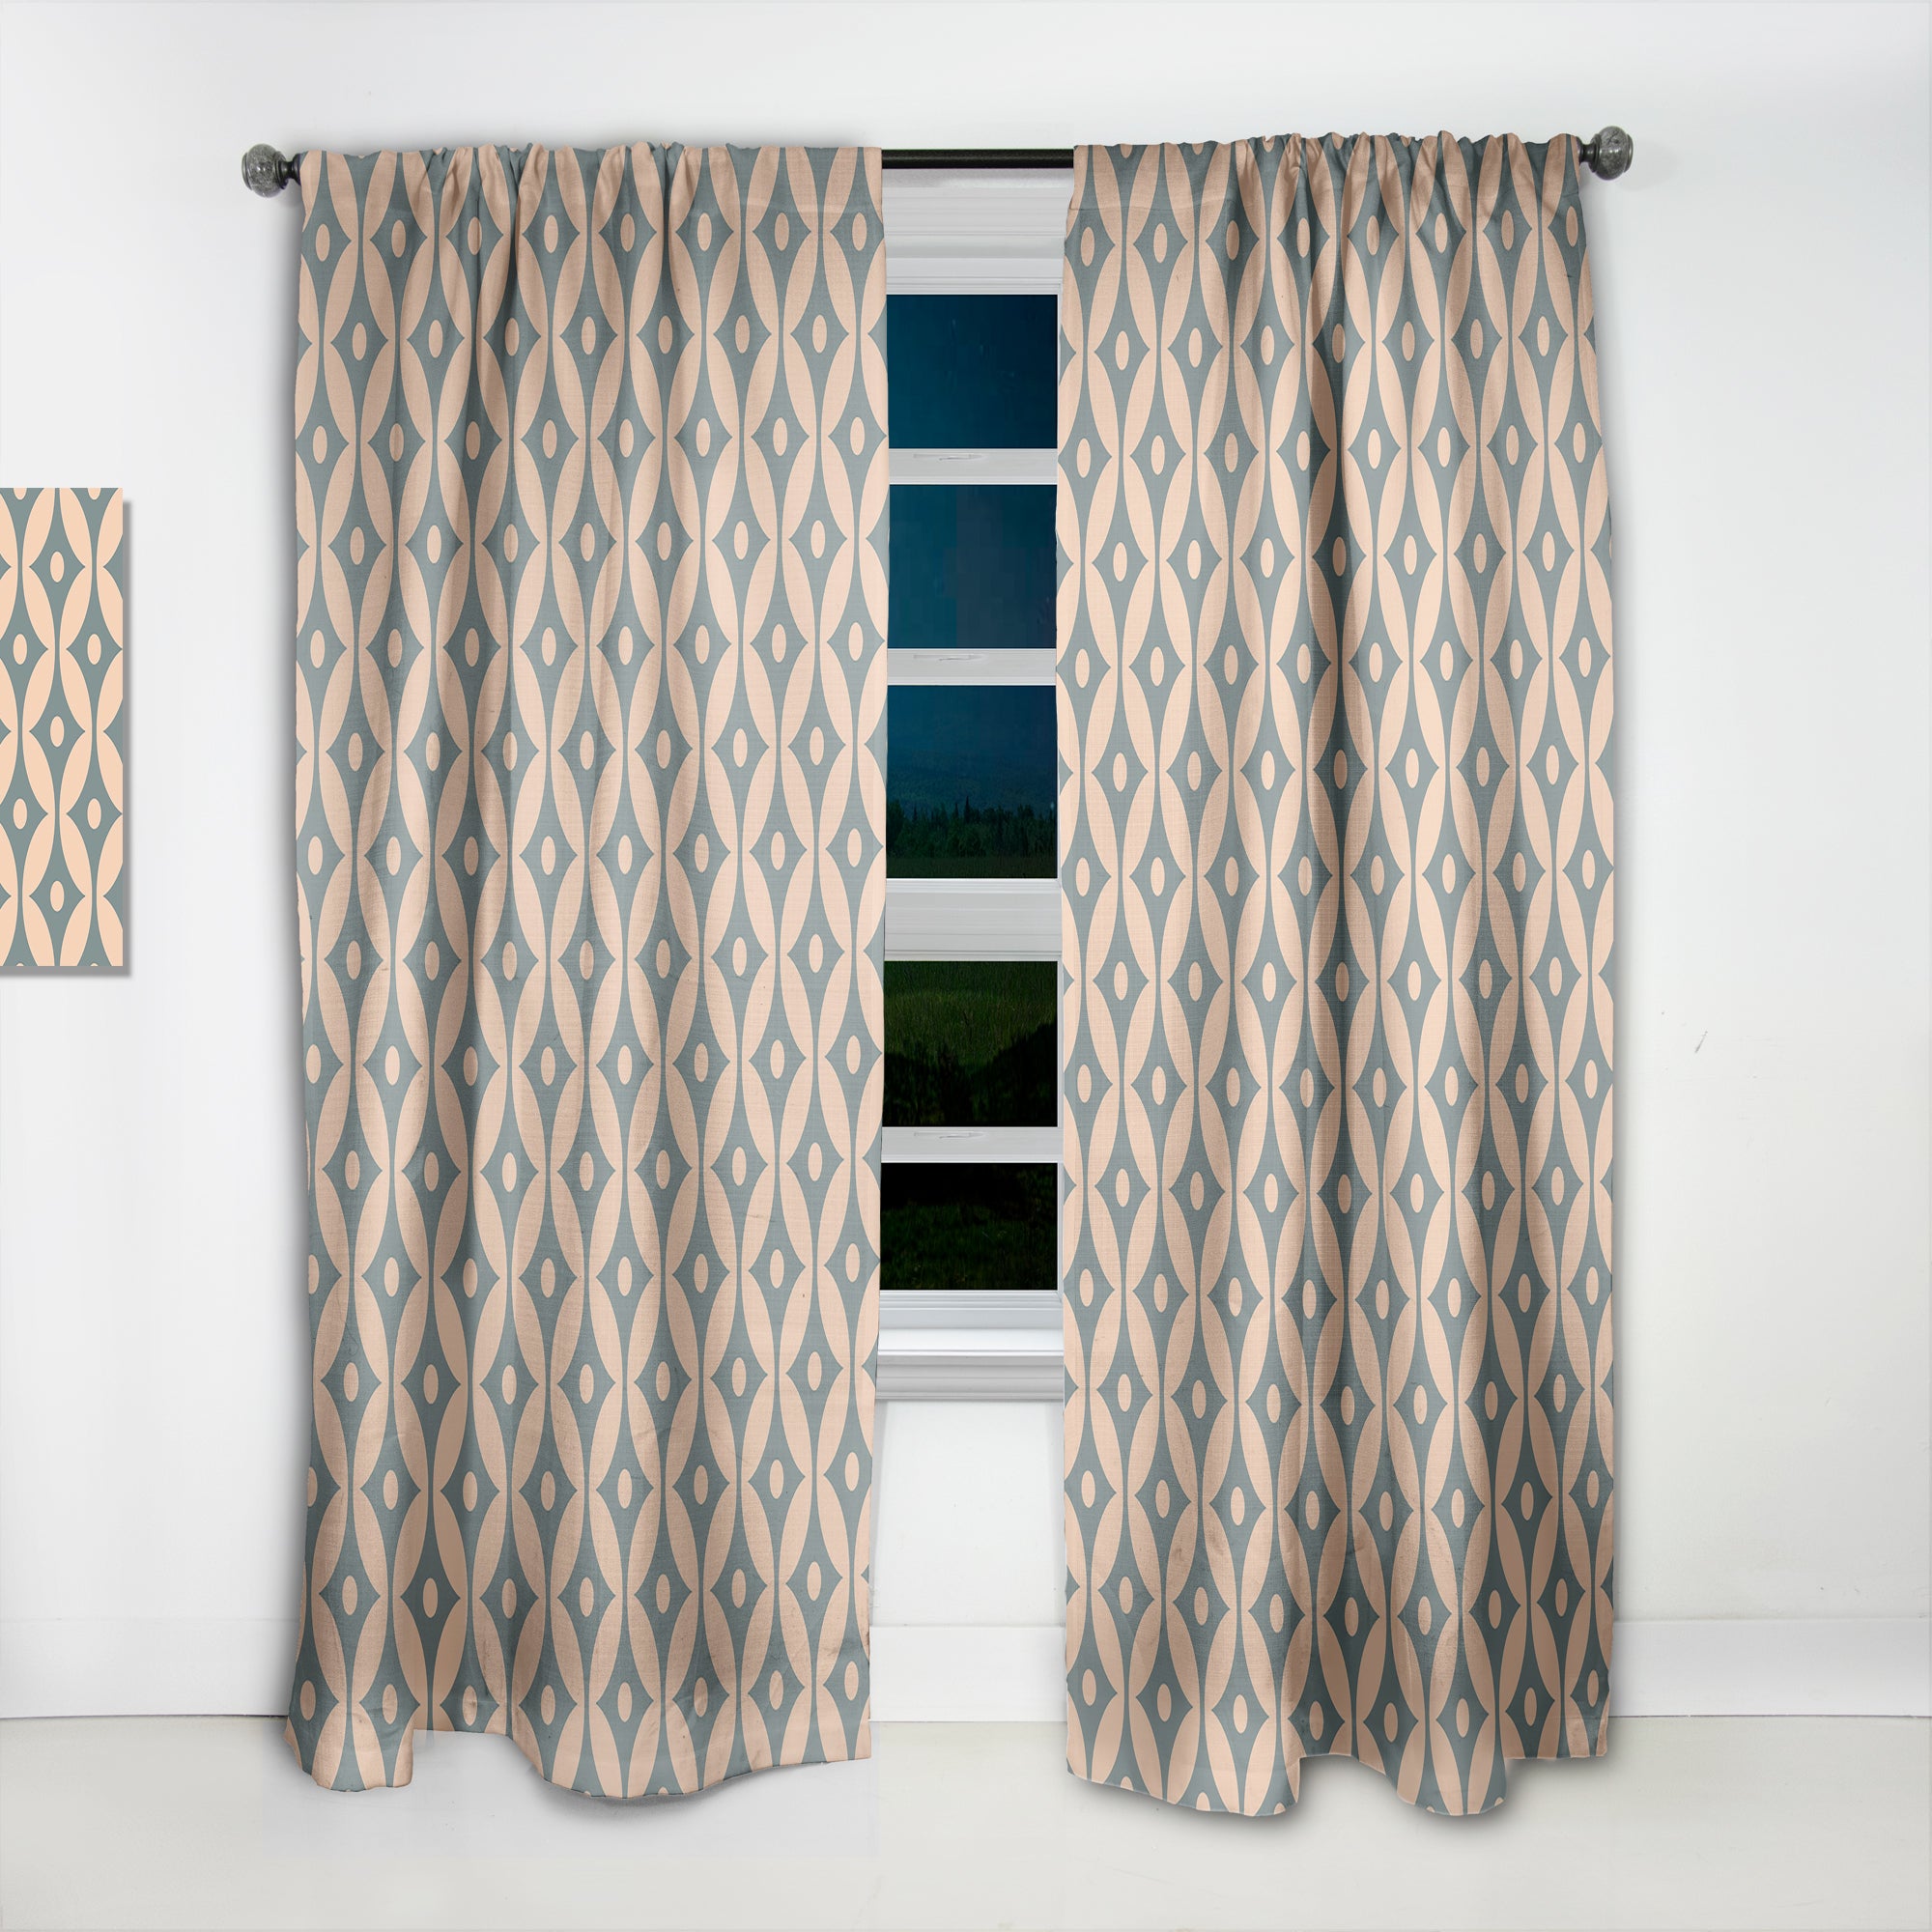 Designart 'Retro Pattern Abstract Design IV' Mid-Century Modern Curtain Panel